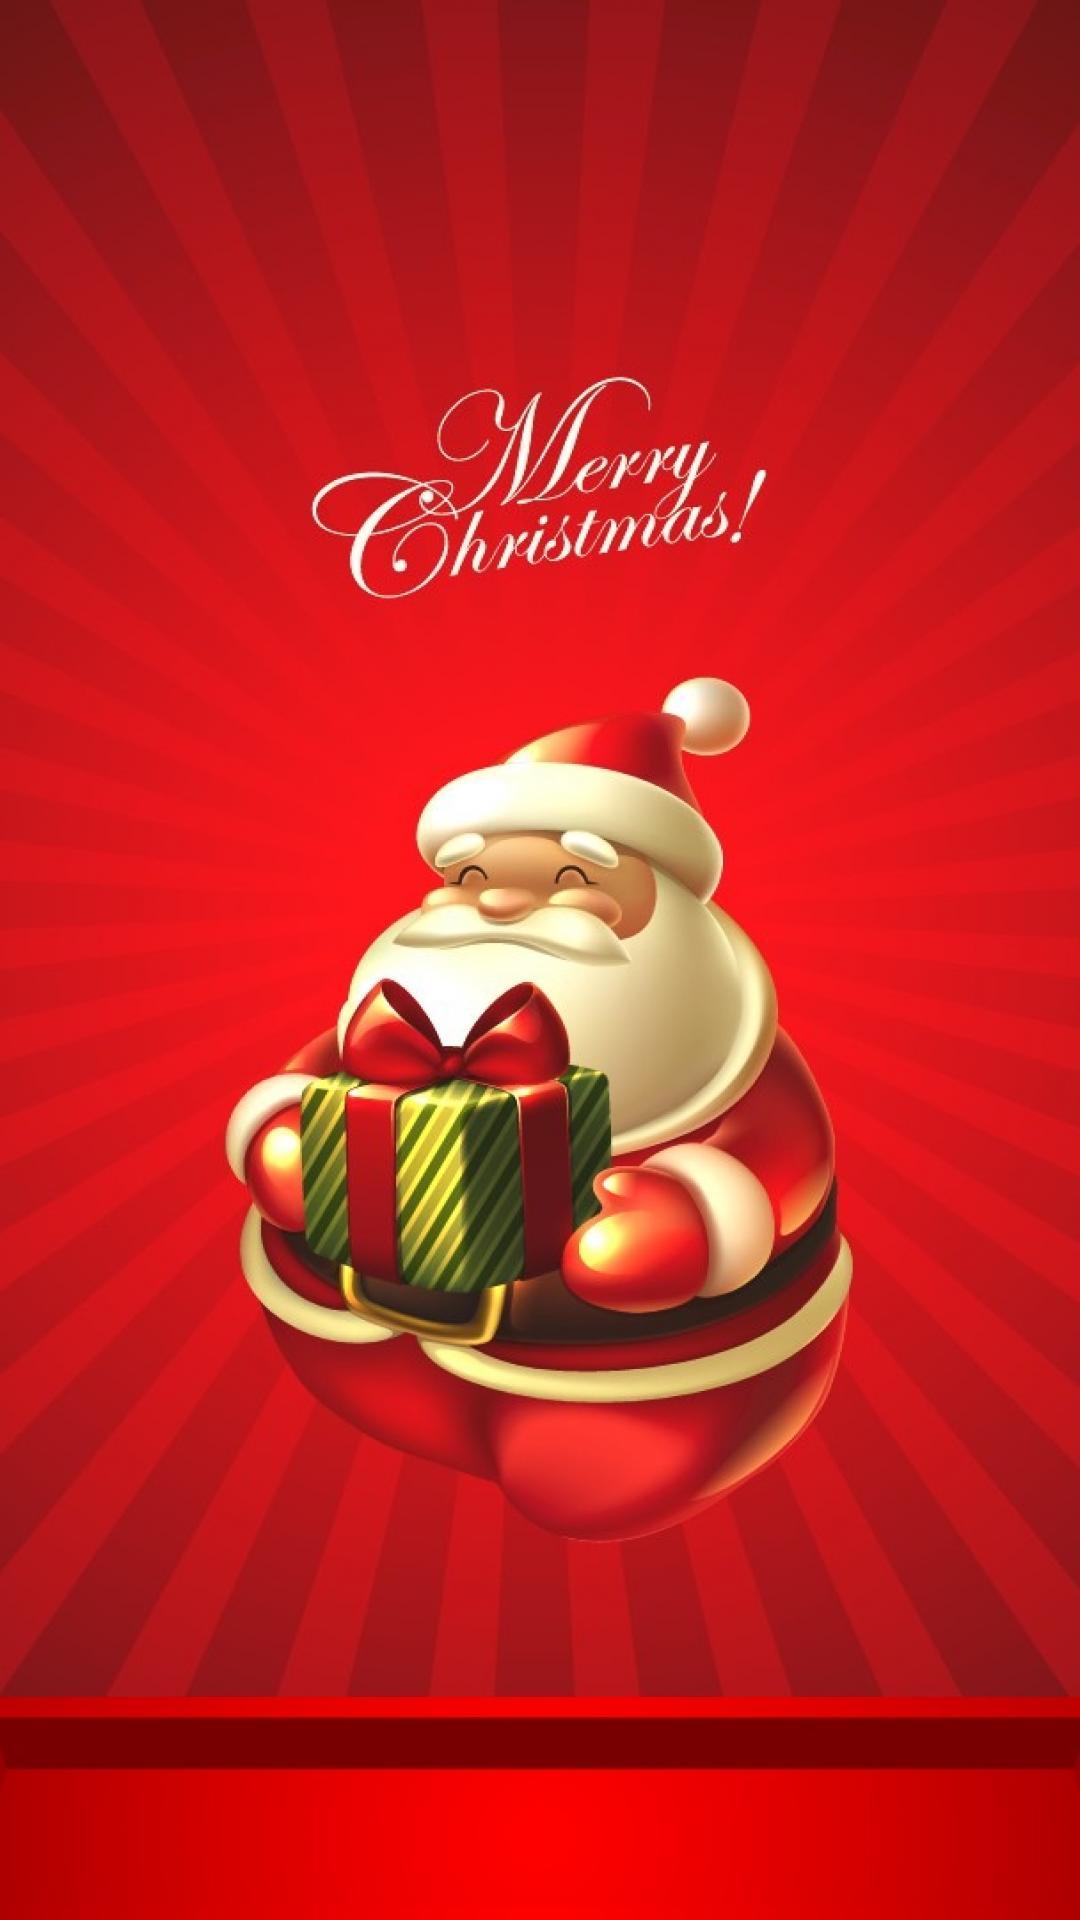 Cute Christmas Santa Claus iPhone 8 Wallpaper Free Download